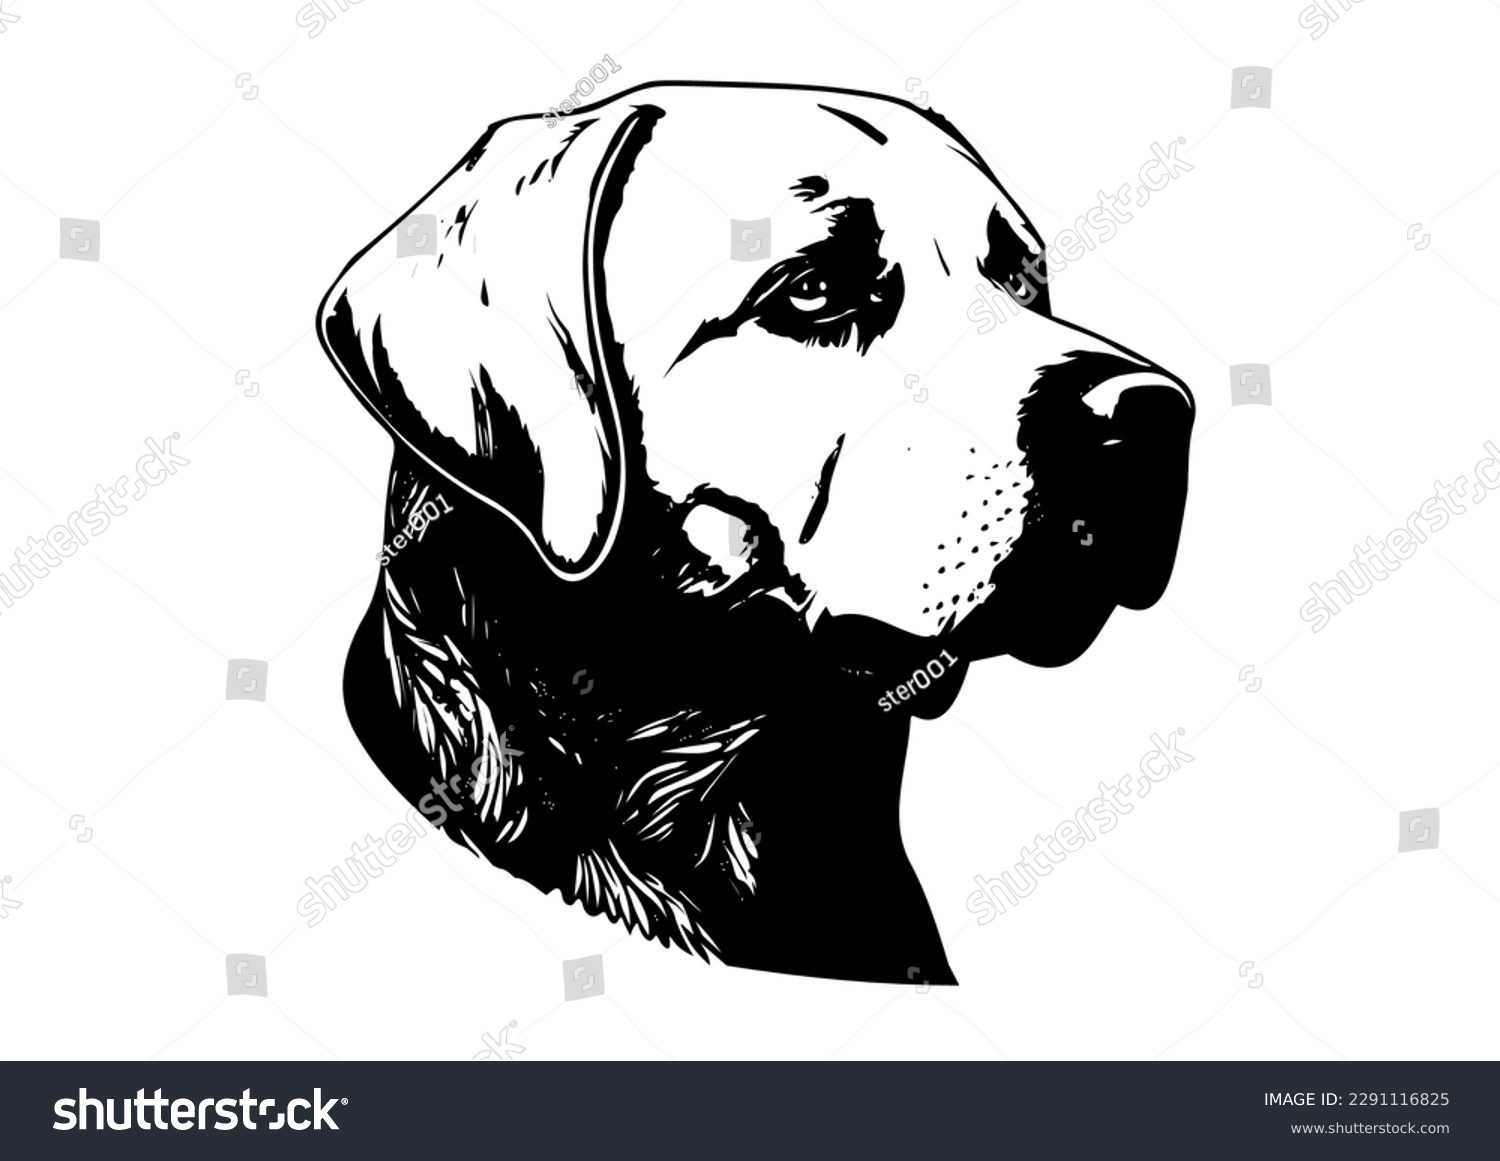 Labrador sketch images stock photos d objects vectors